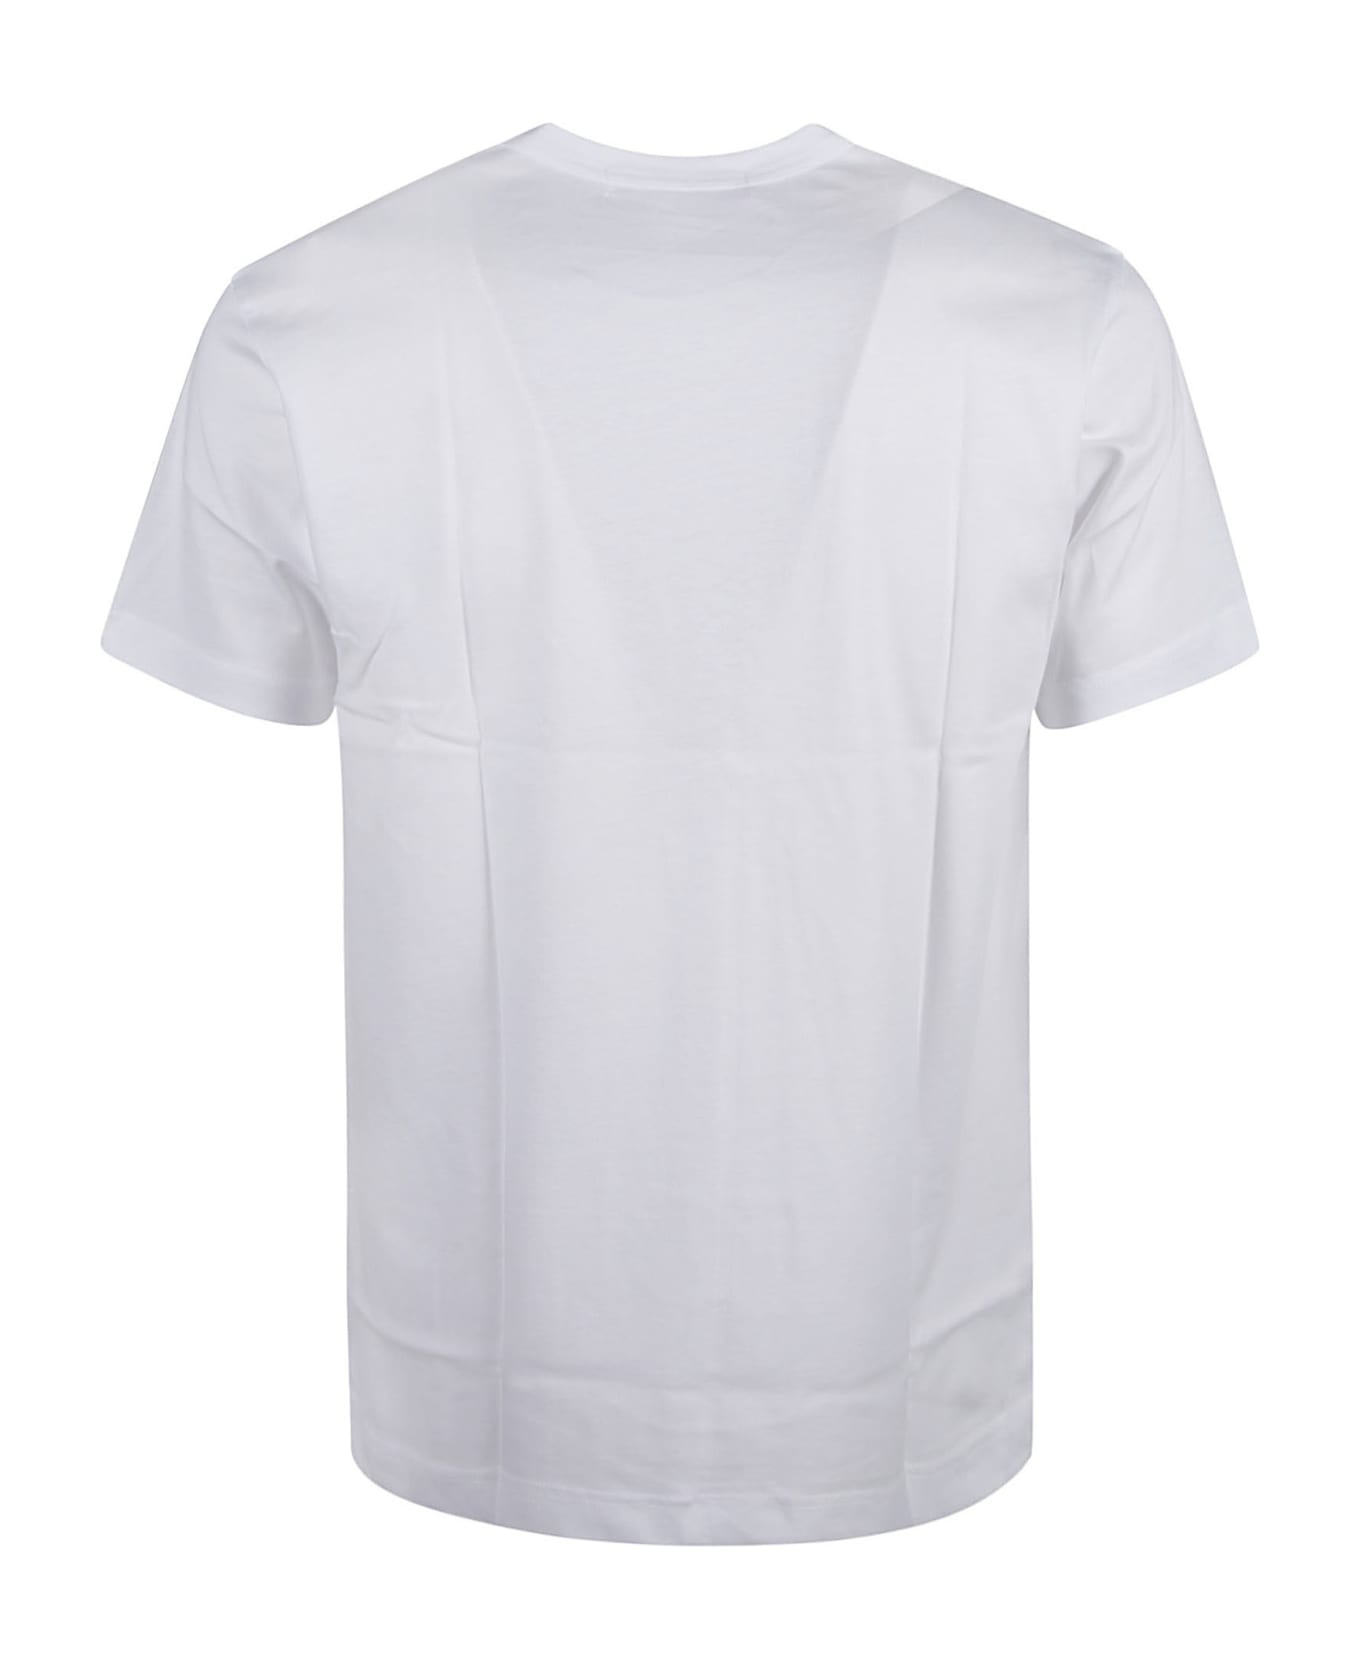 Comme des Garçons Shirt I've Always Admited T-shirt - White